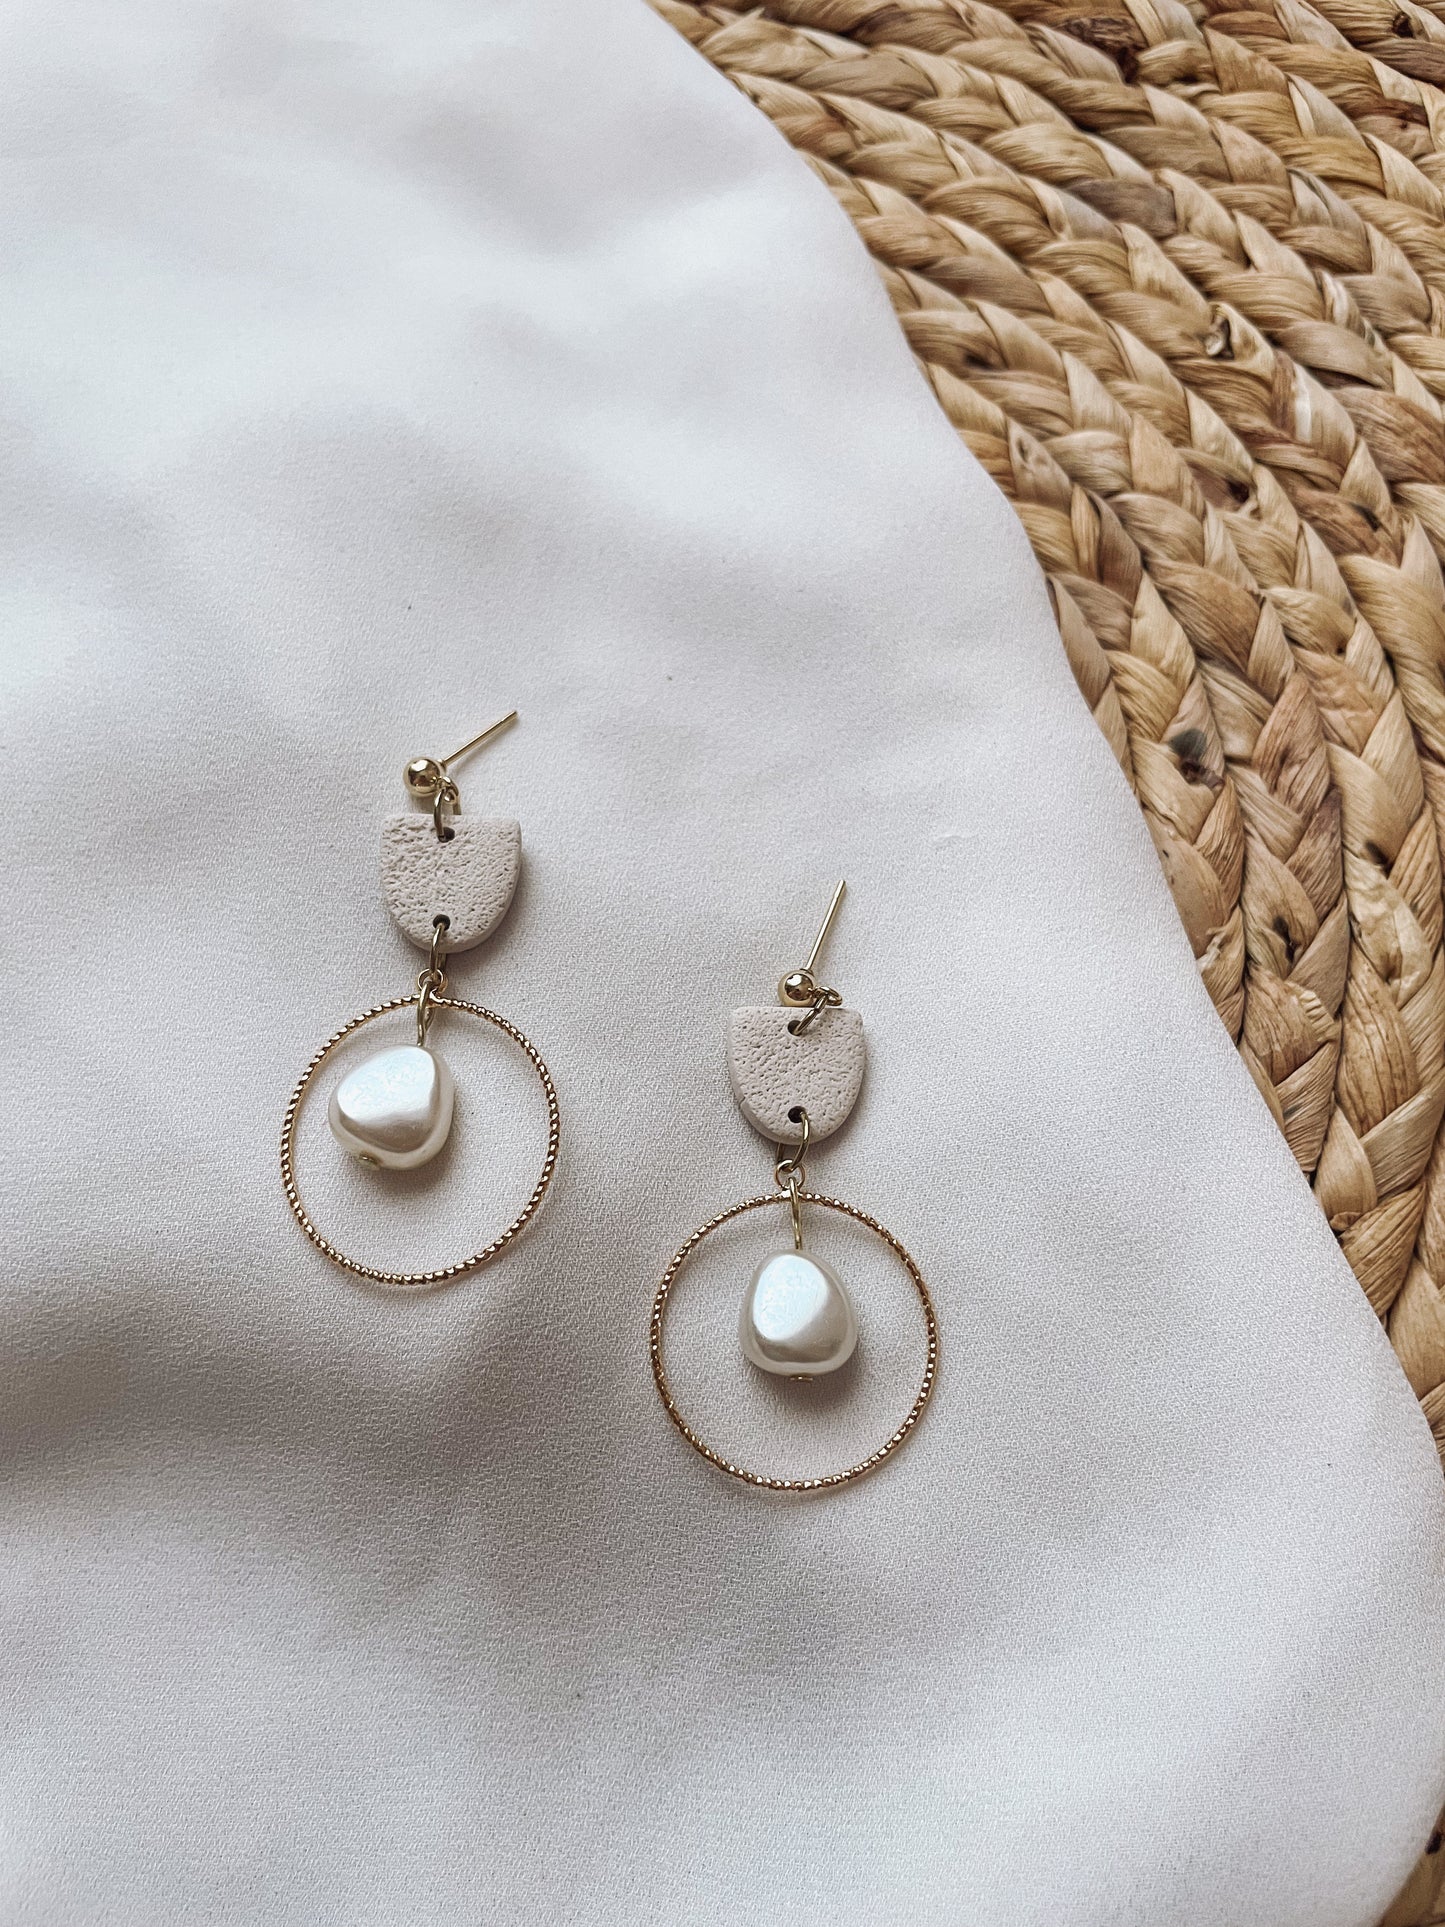 The "Bonnie" Earrings I Minimalist Neutral Earrings with Pearls